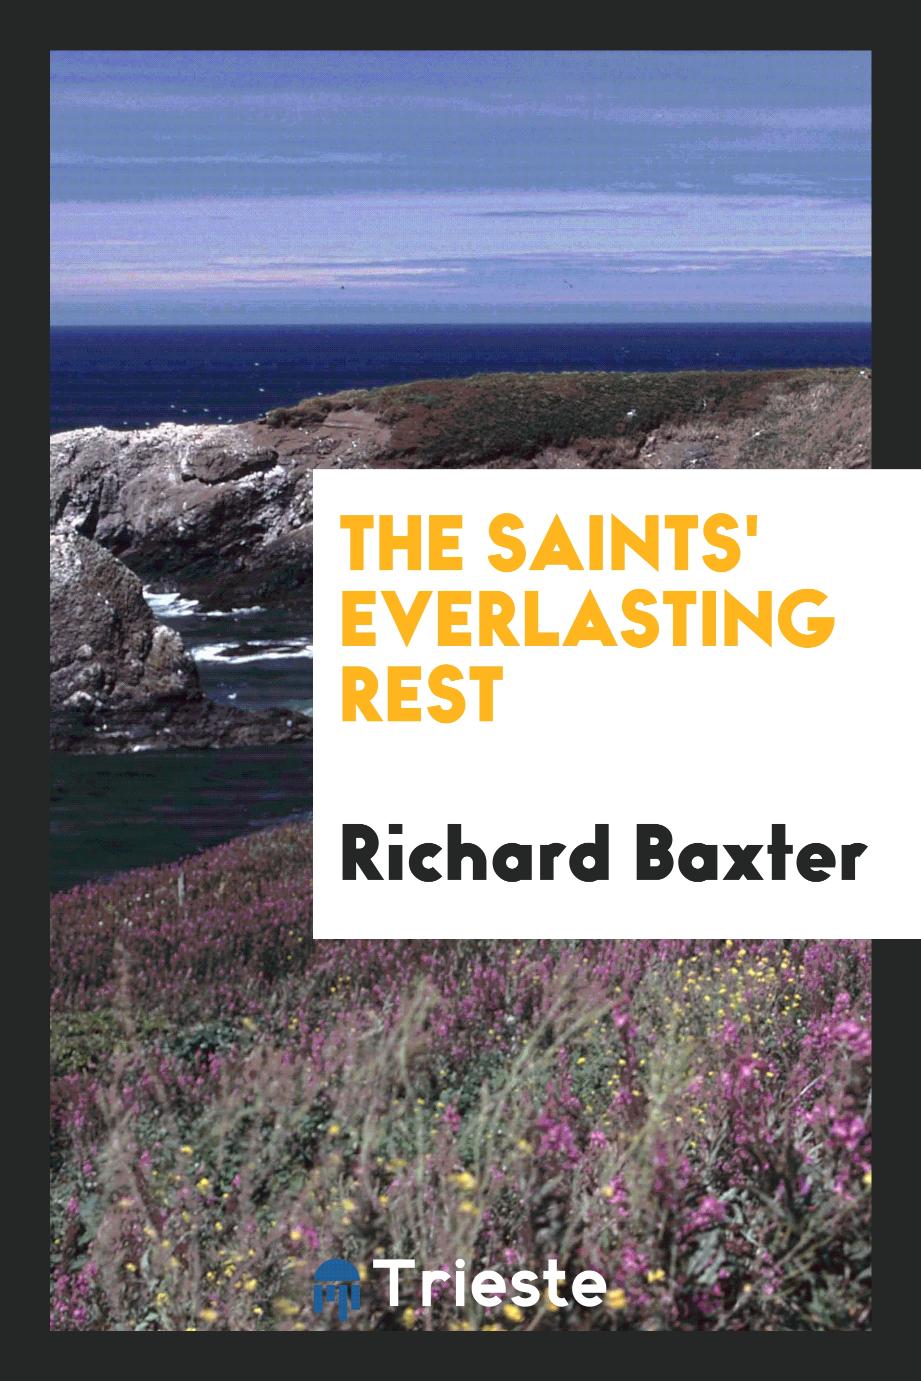 The saints' everlasting rest